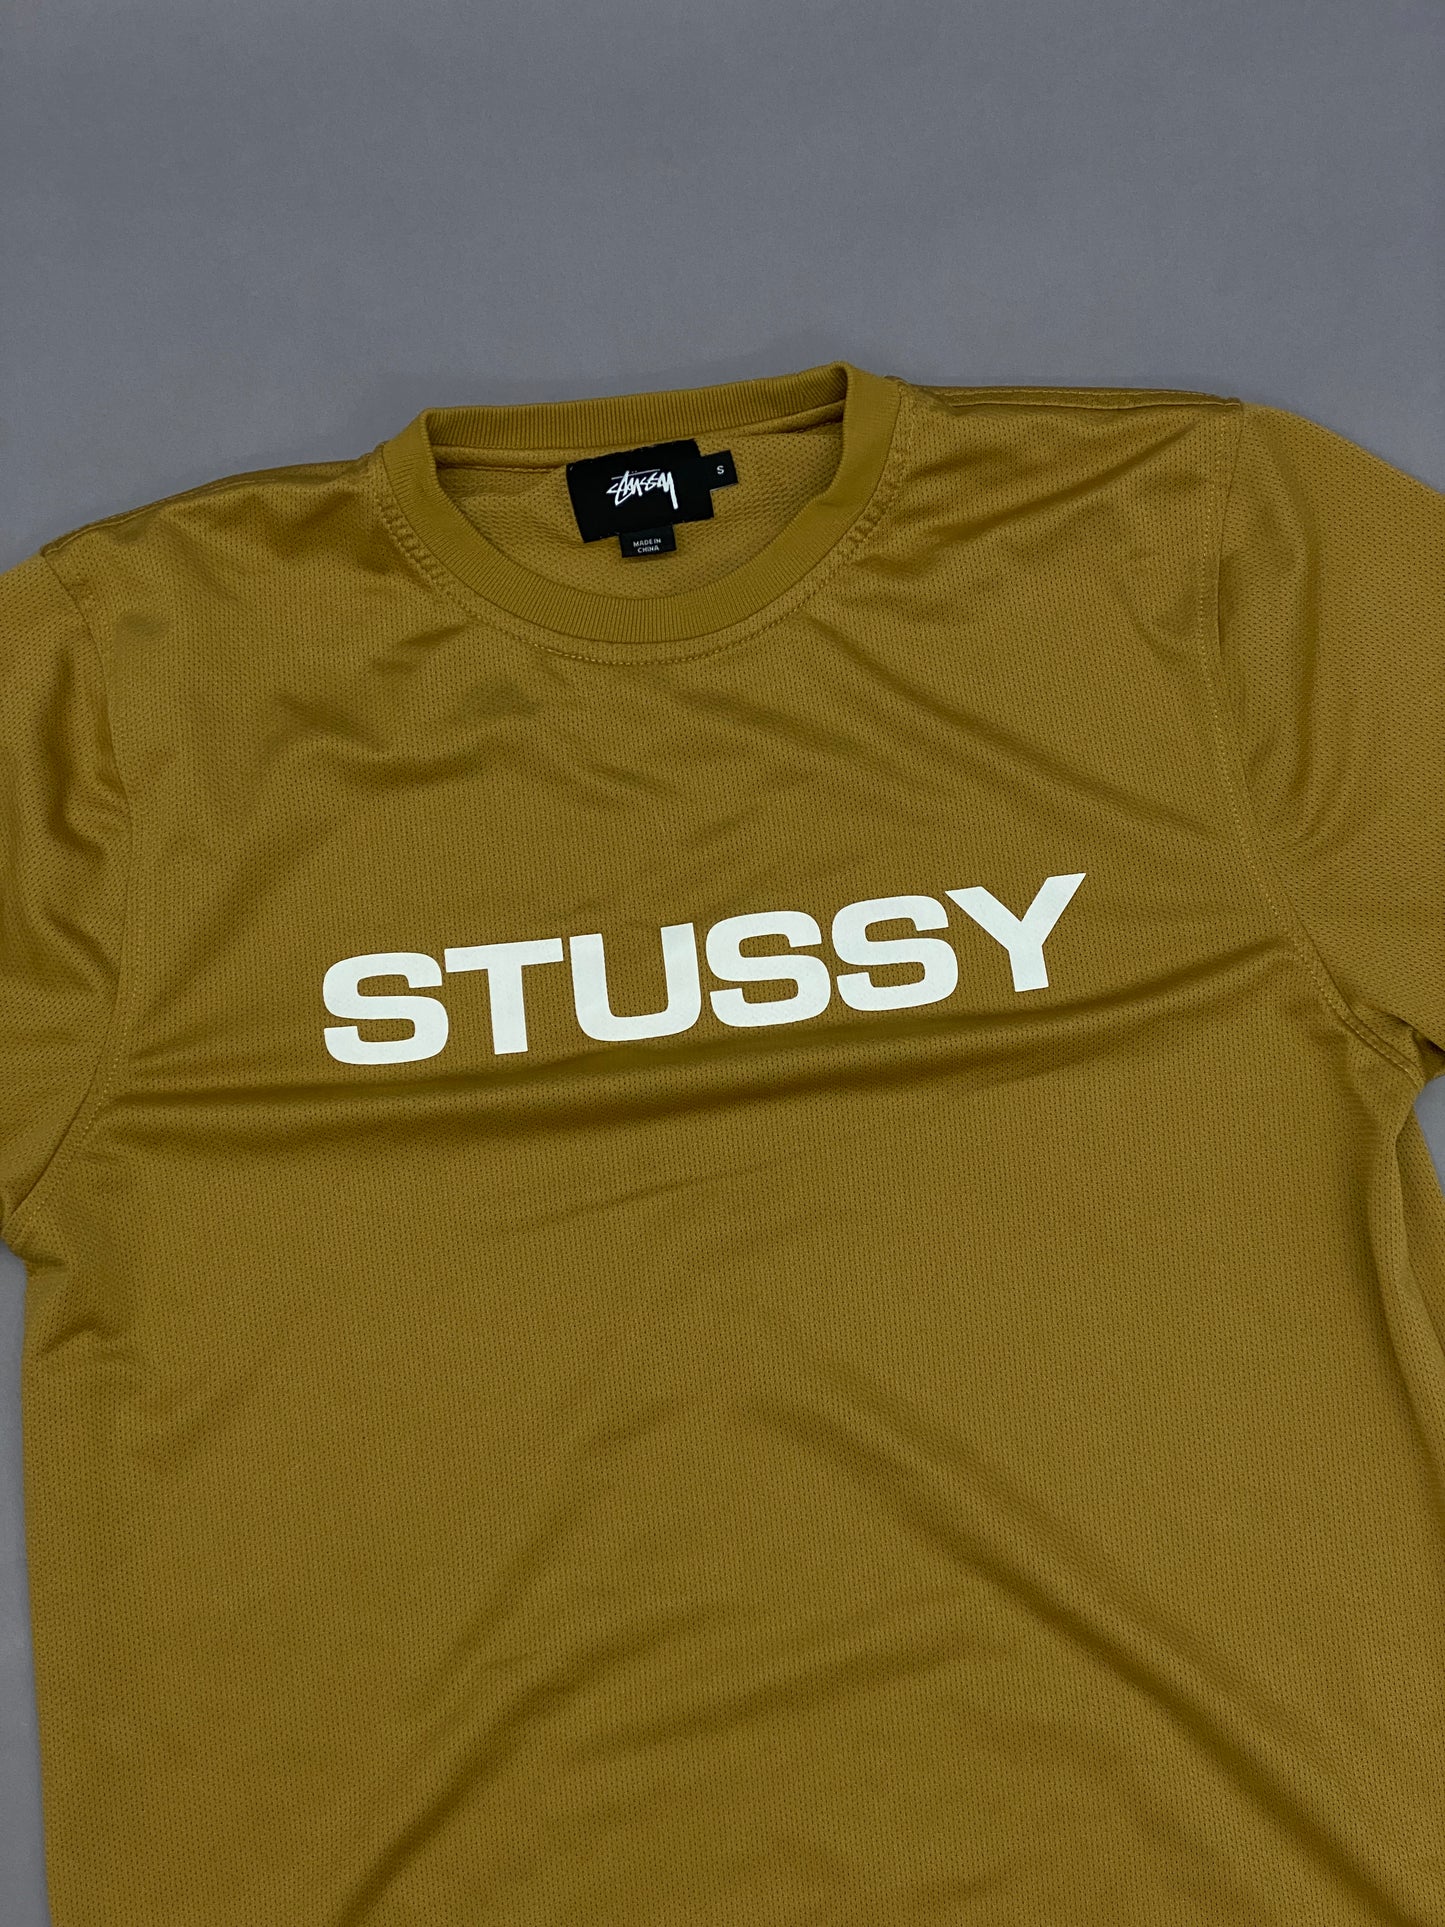 Jersey Stussy